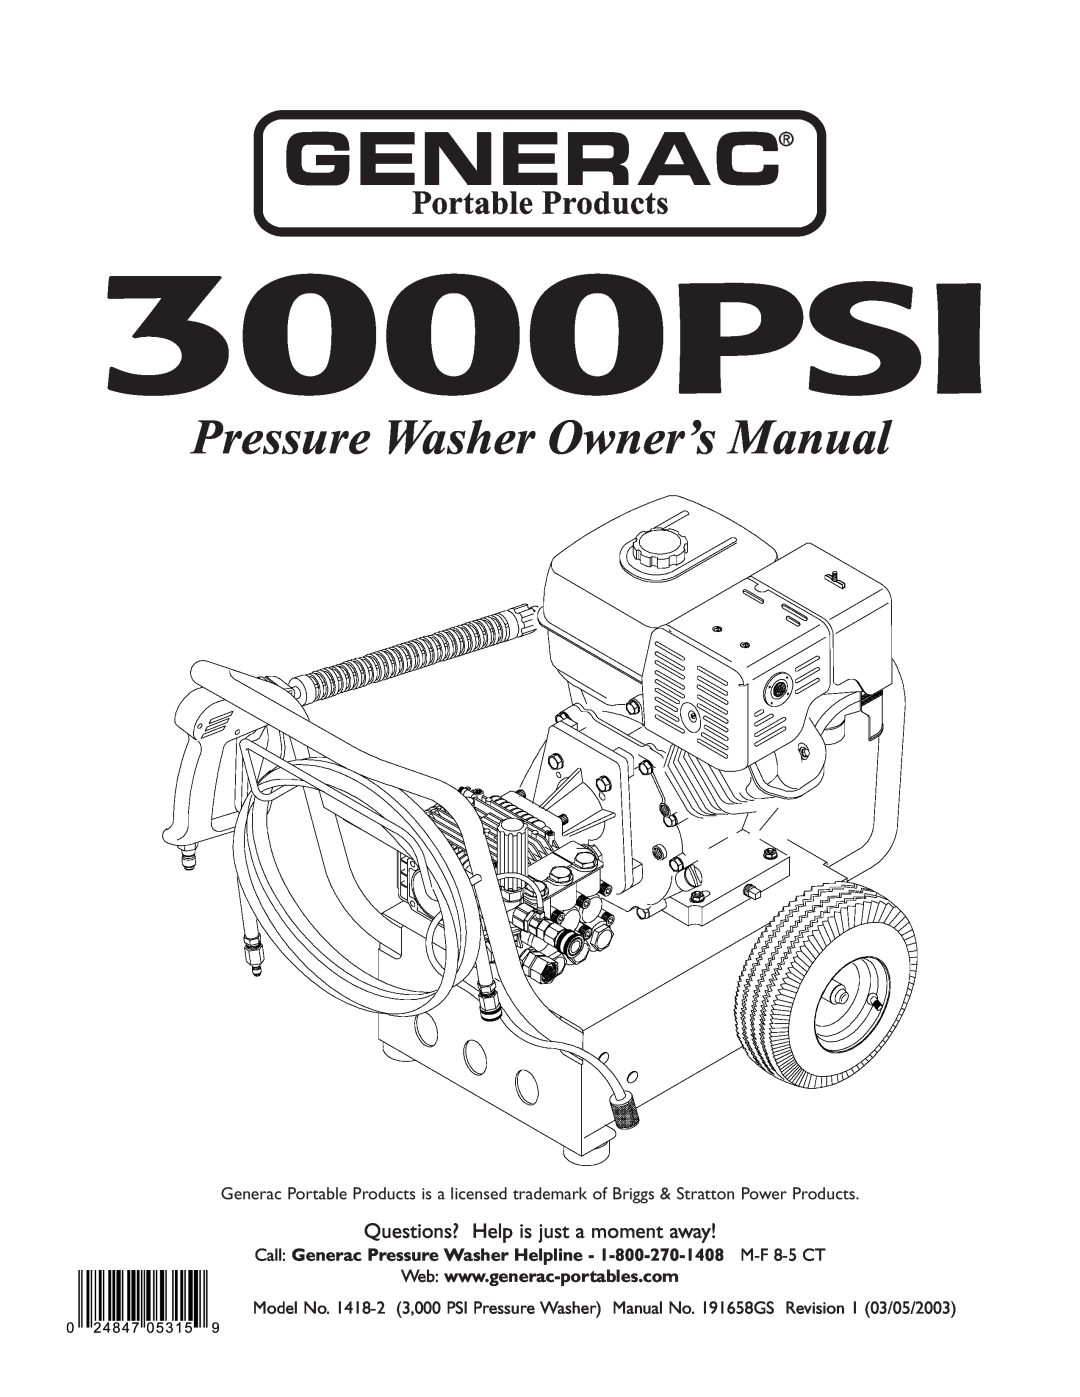 Briggs & Stratton 1418-2 owner manual Call Generac Pressure Washer Helpline - 1-800-270-1408 M-F 8-5 CT, 3000PSI 